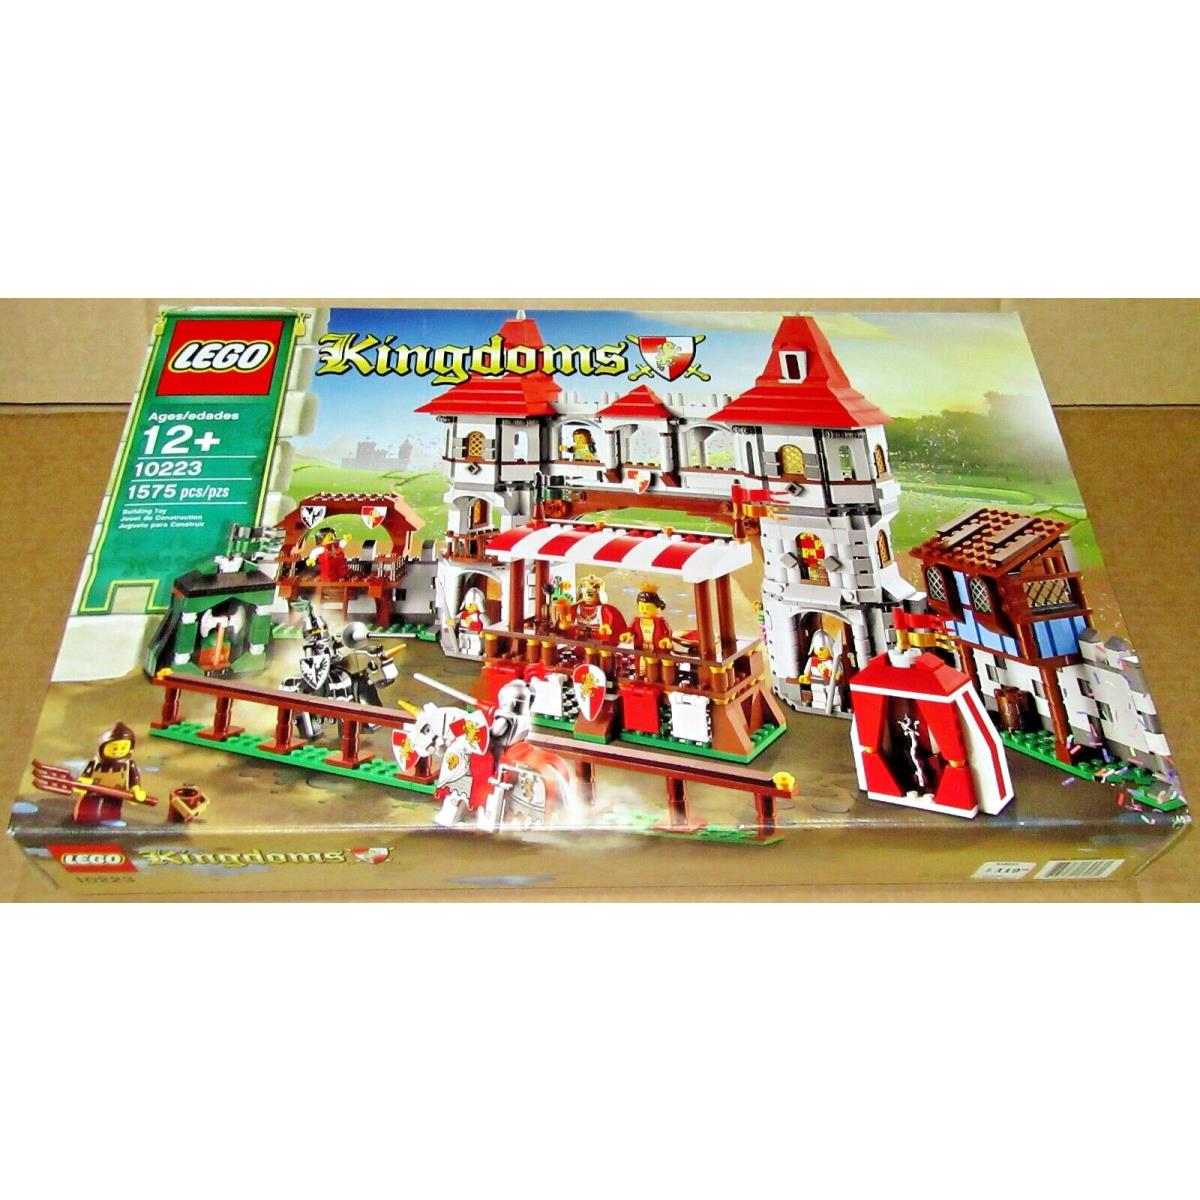 Lego 10223 Kingdoms Joust Castle King Knight Medieval Retired